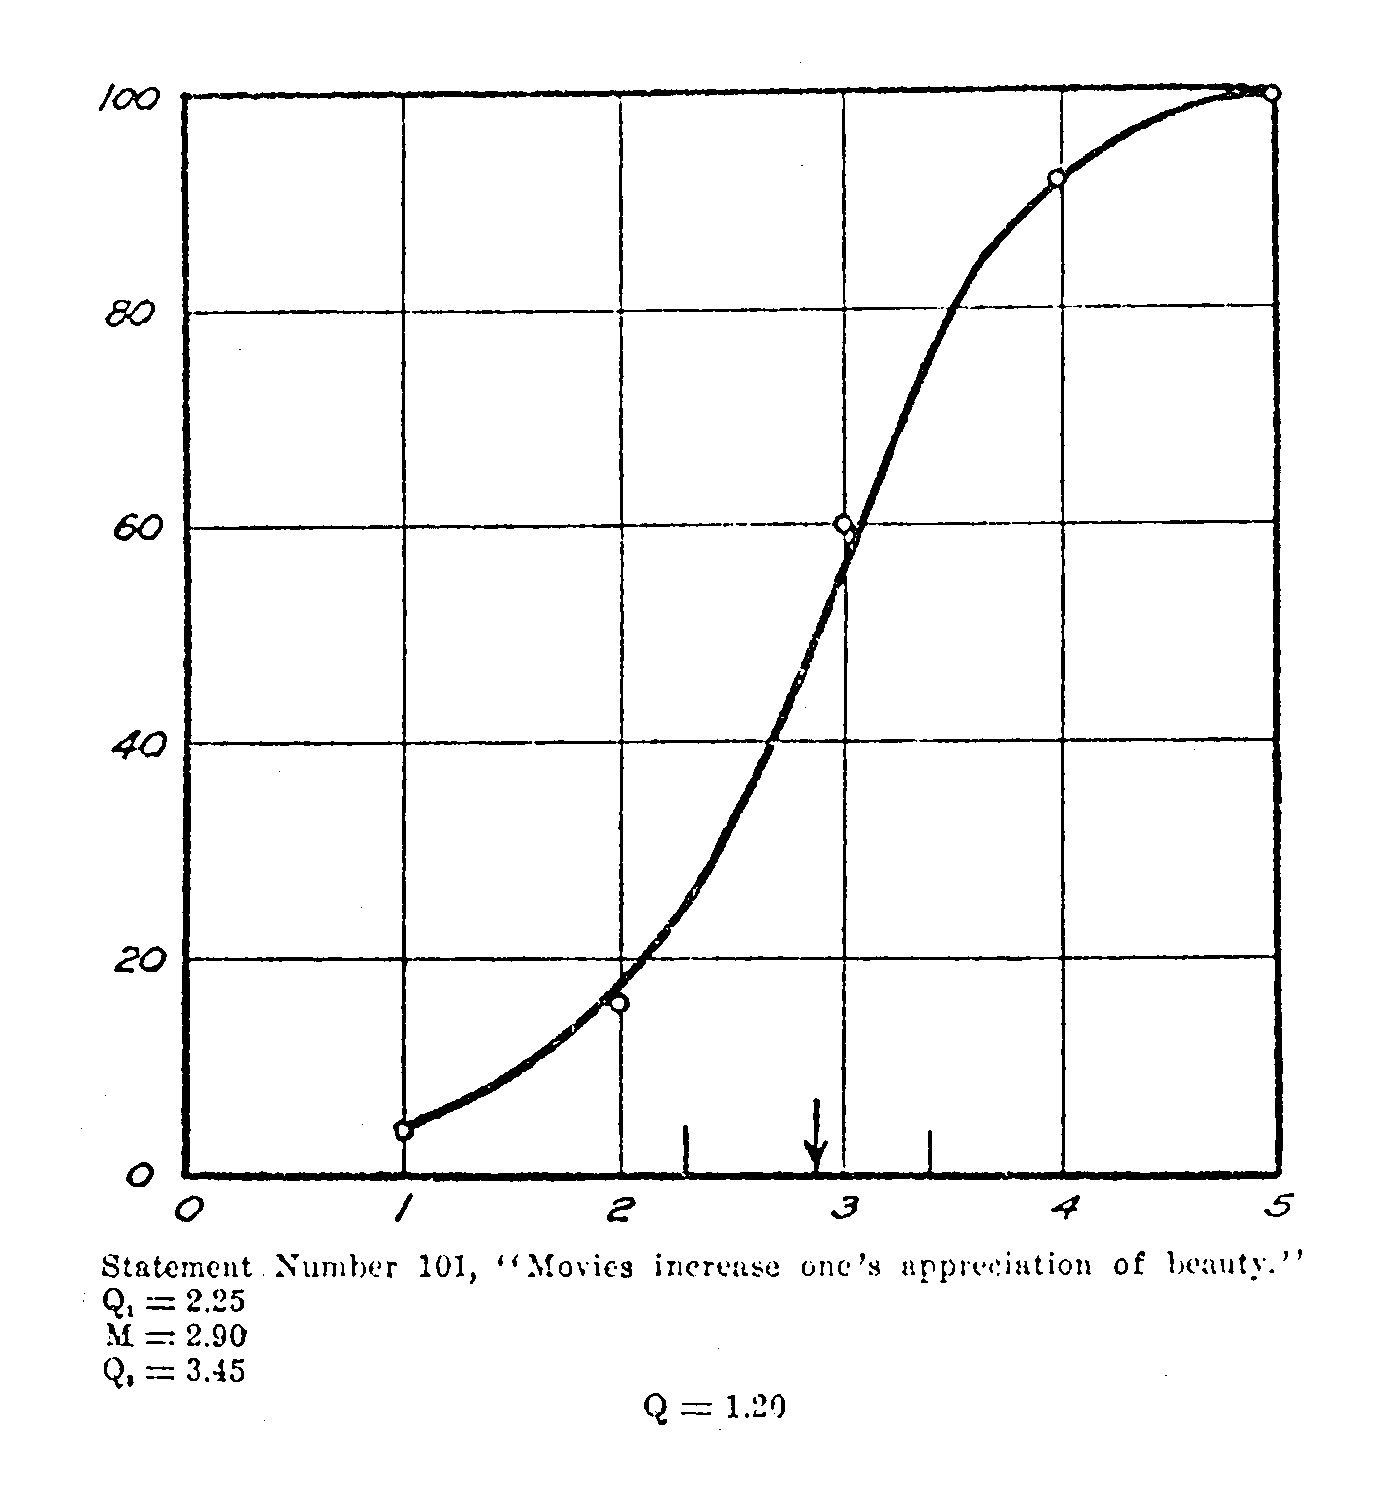 Figure 2 Cumulative distribution for statement 101